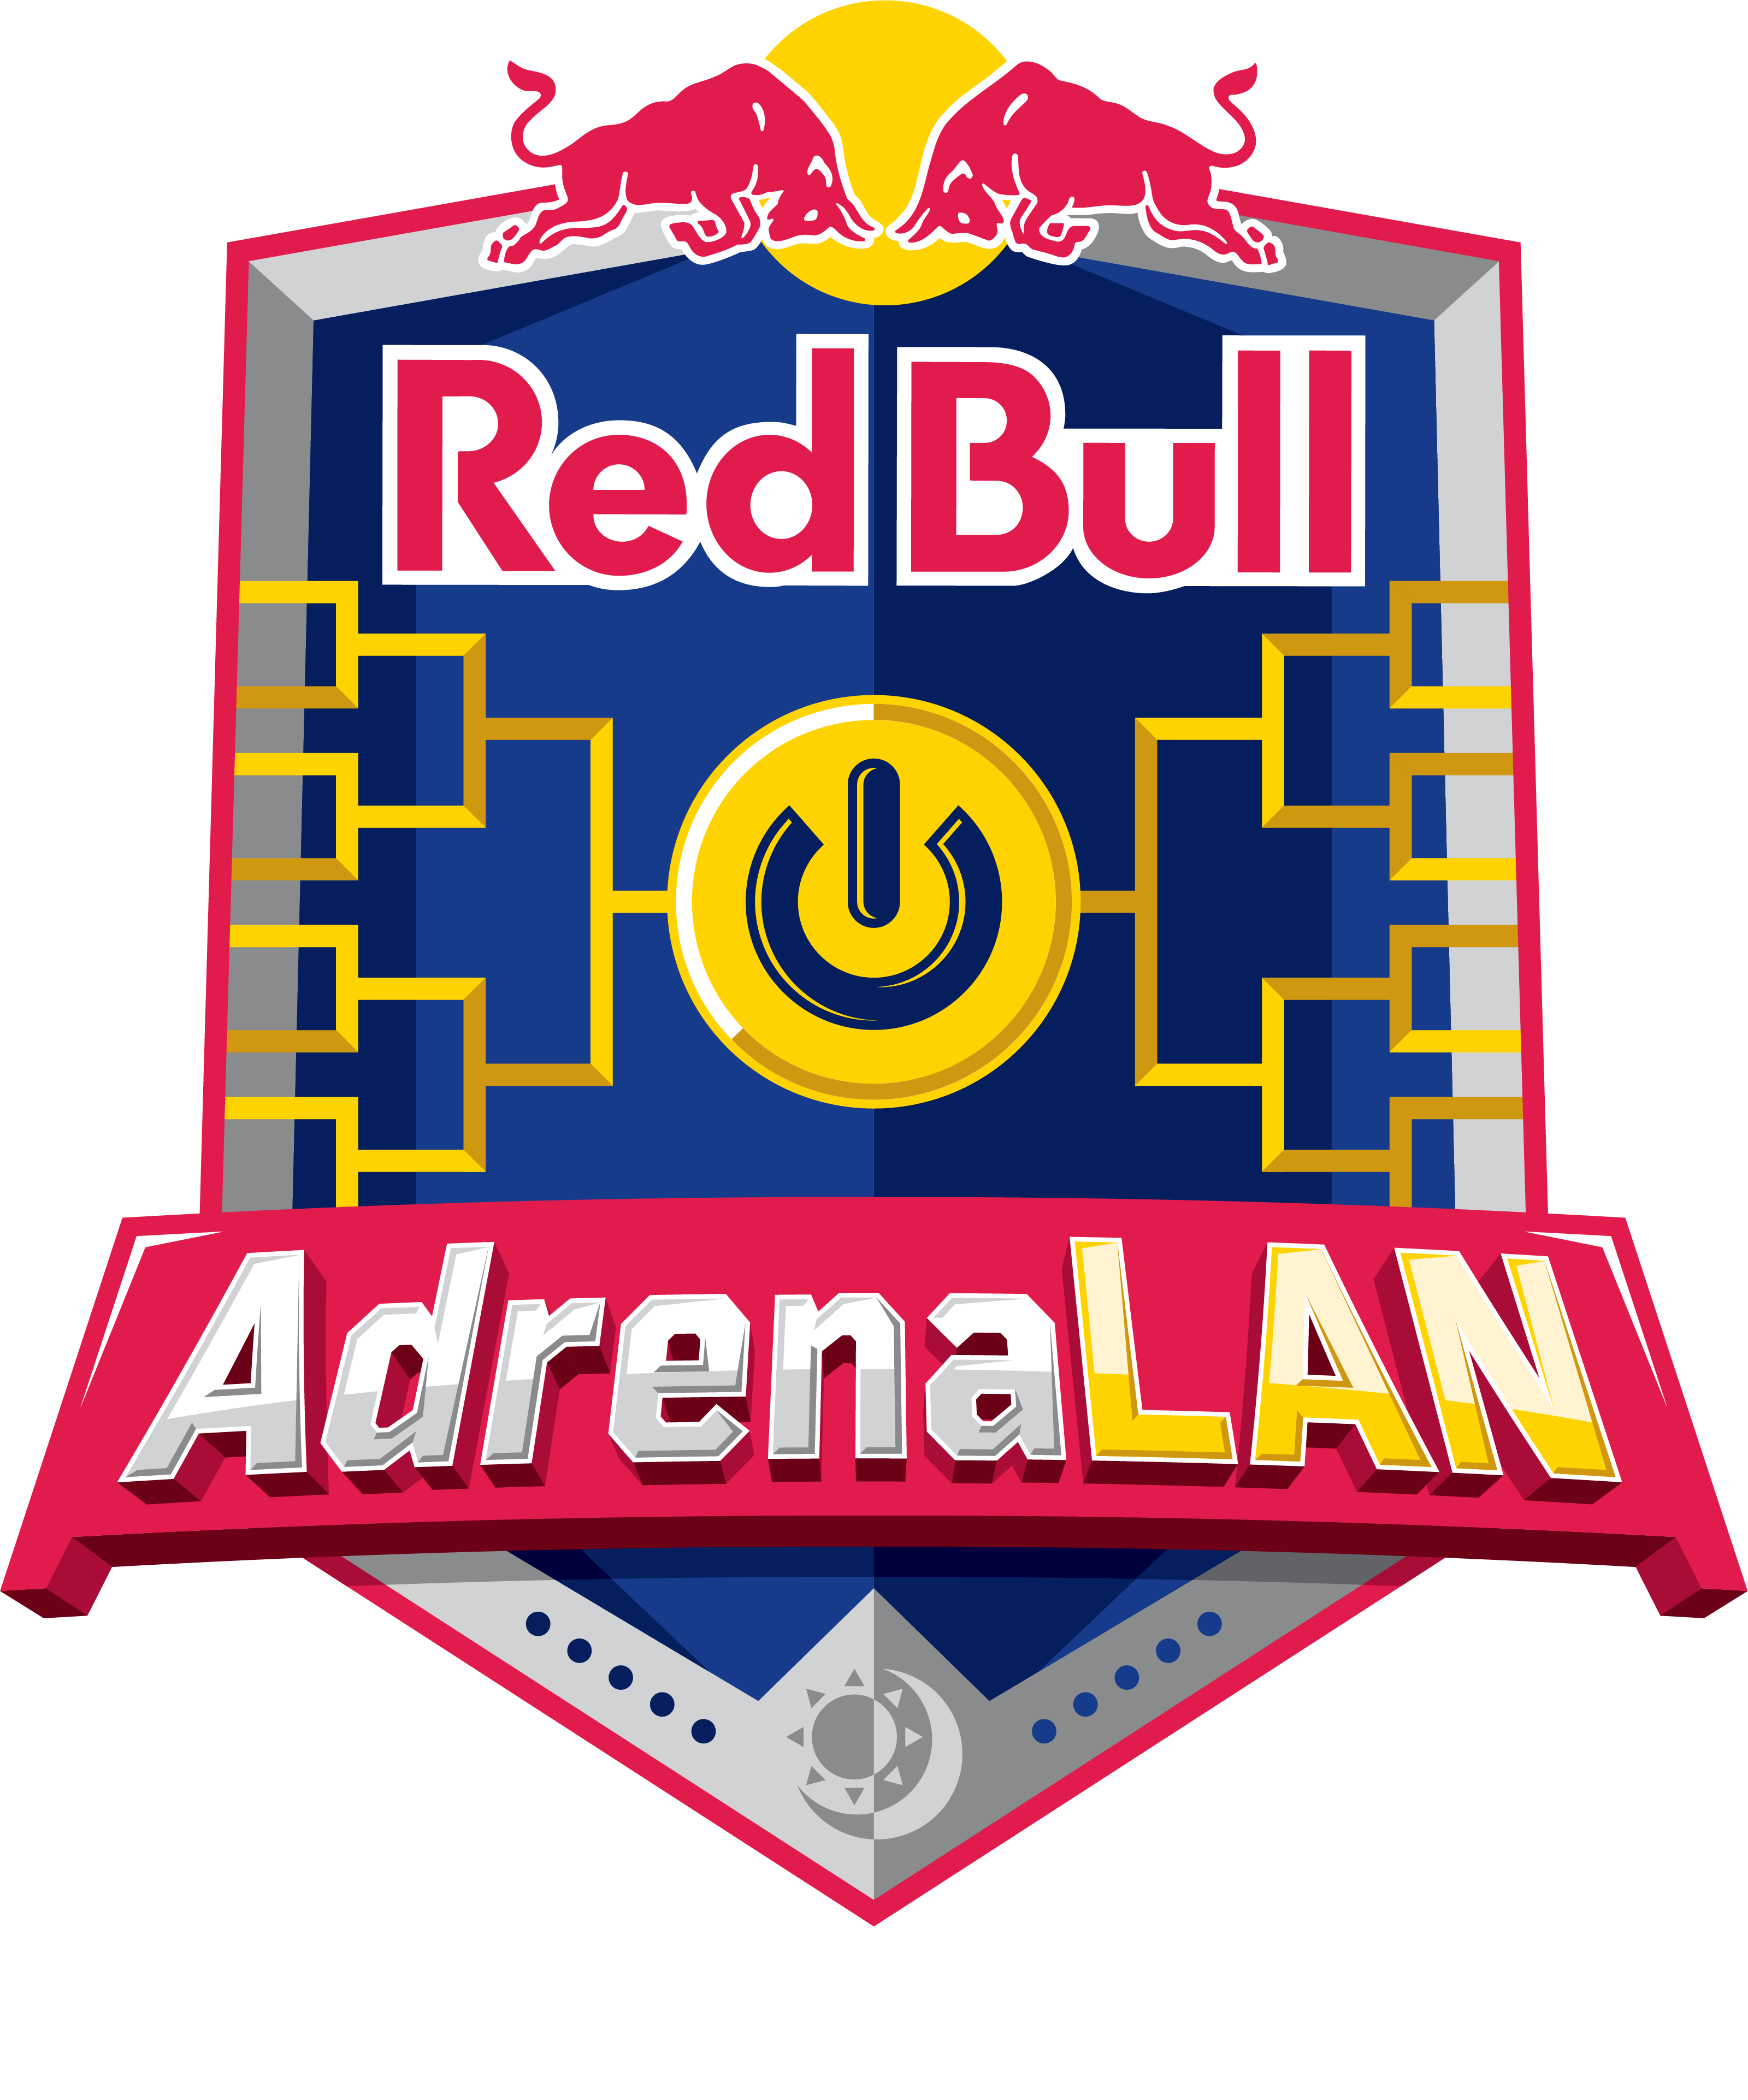 Red Bull Adrena L A N Event Logo